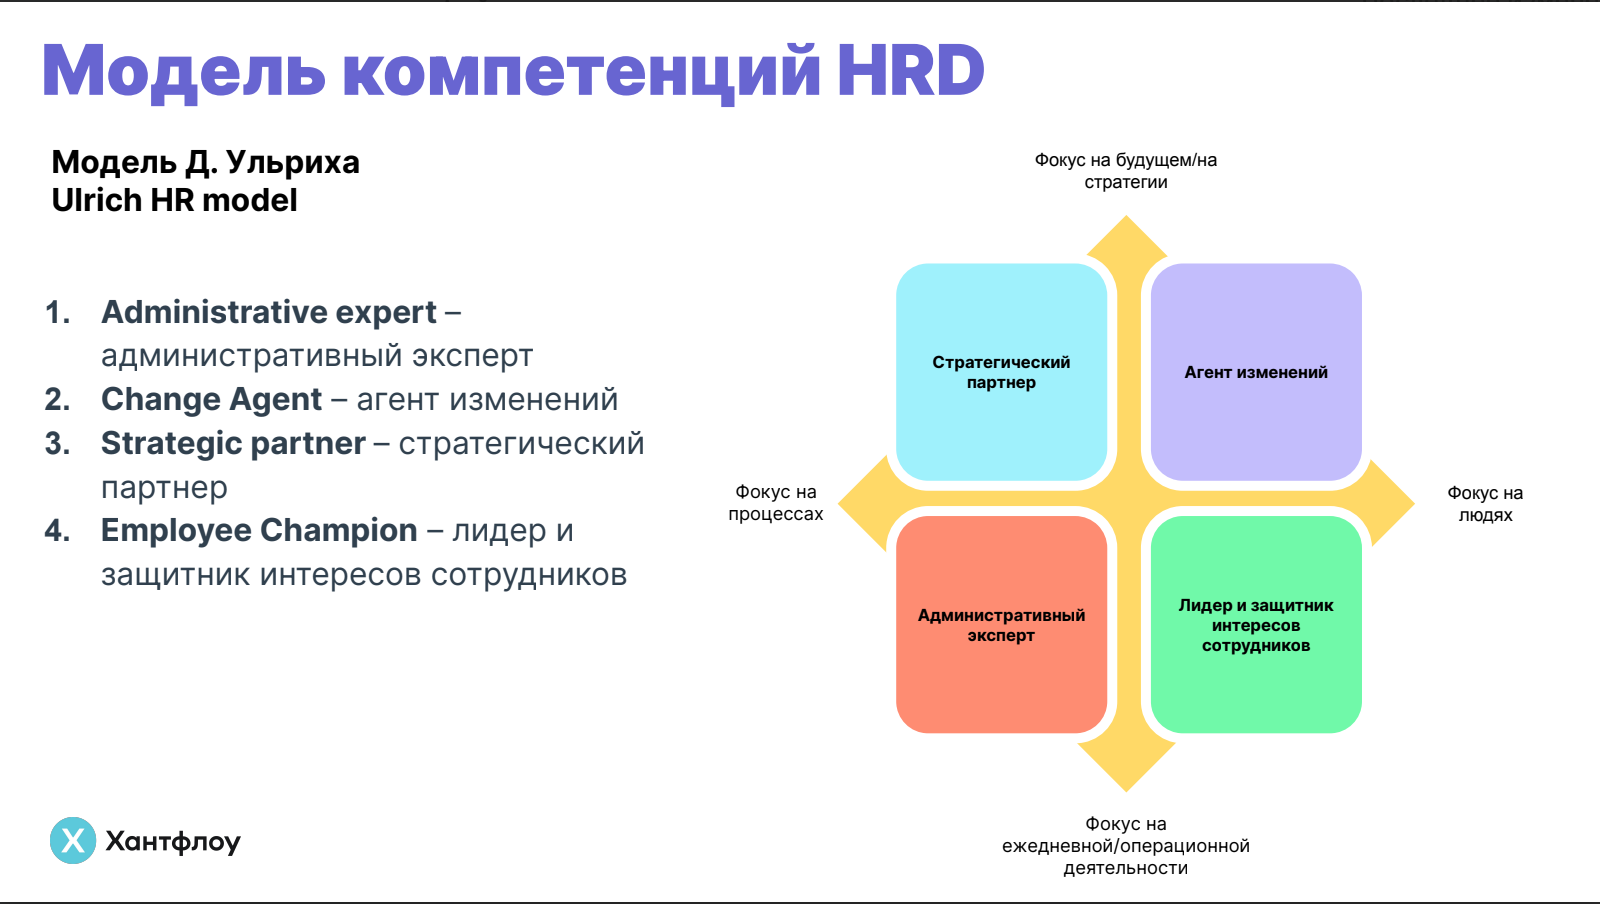 Модель компетенций HRD